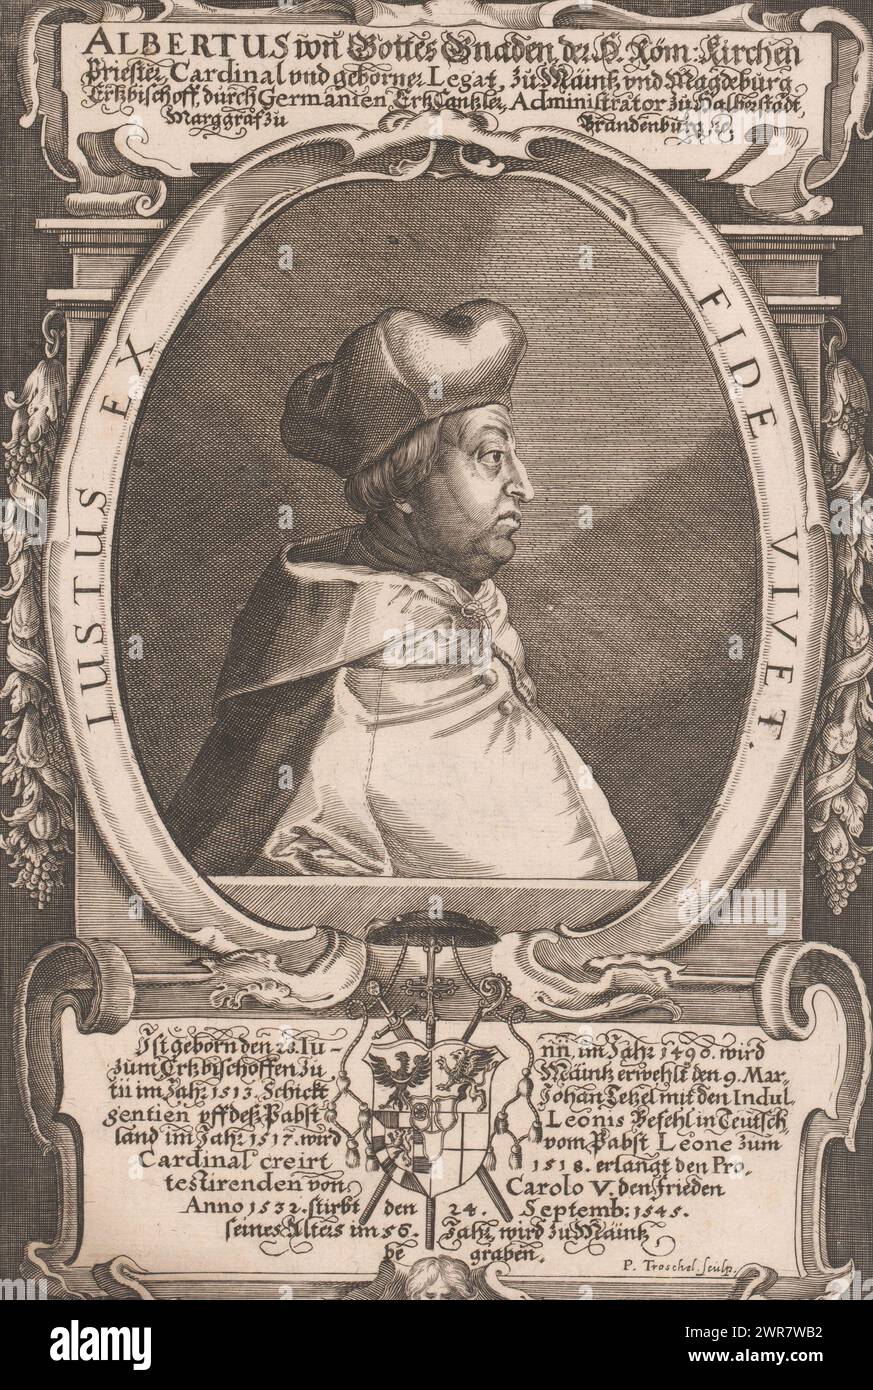 Portrait of Albrecht von Brandenburg, print maker: Peter Troschel, Germany, c. 1630 - in or after 1670, paper, engraving, height 284 mm × width 192 mm, print Stock Photo